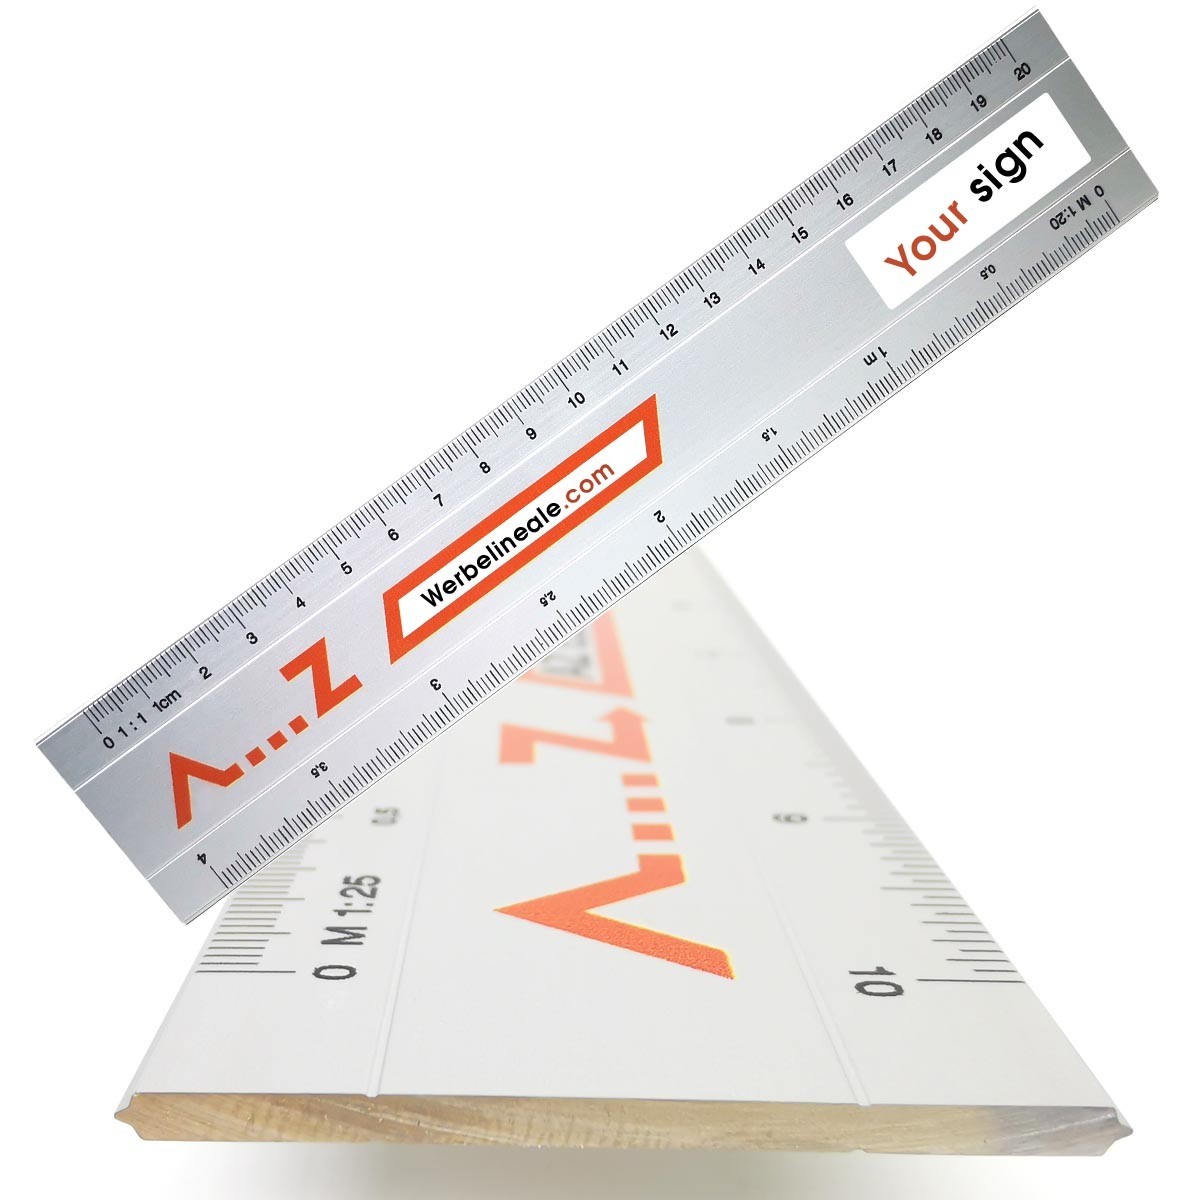 Profiled aluminium advertising ruler with 2 ink edges and digital print